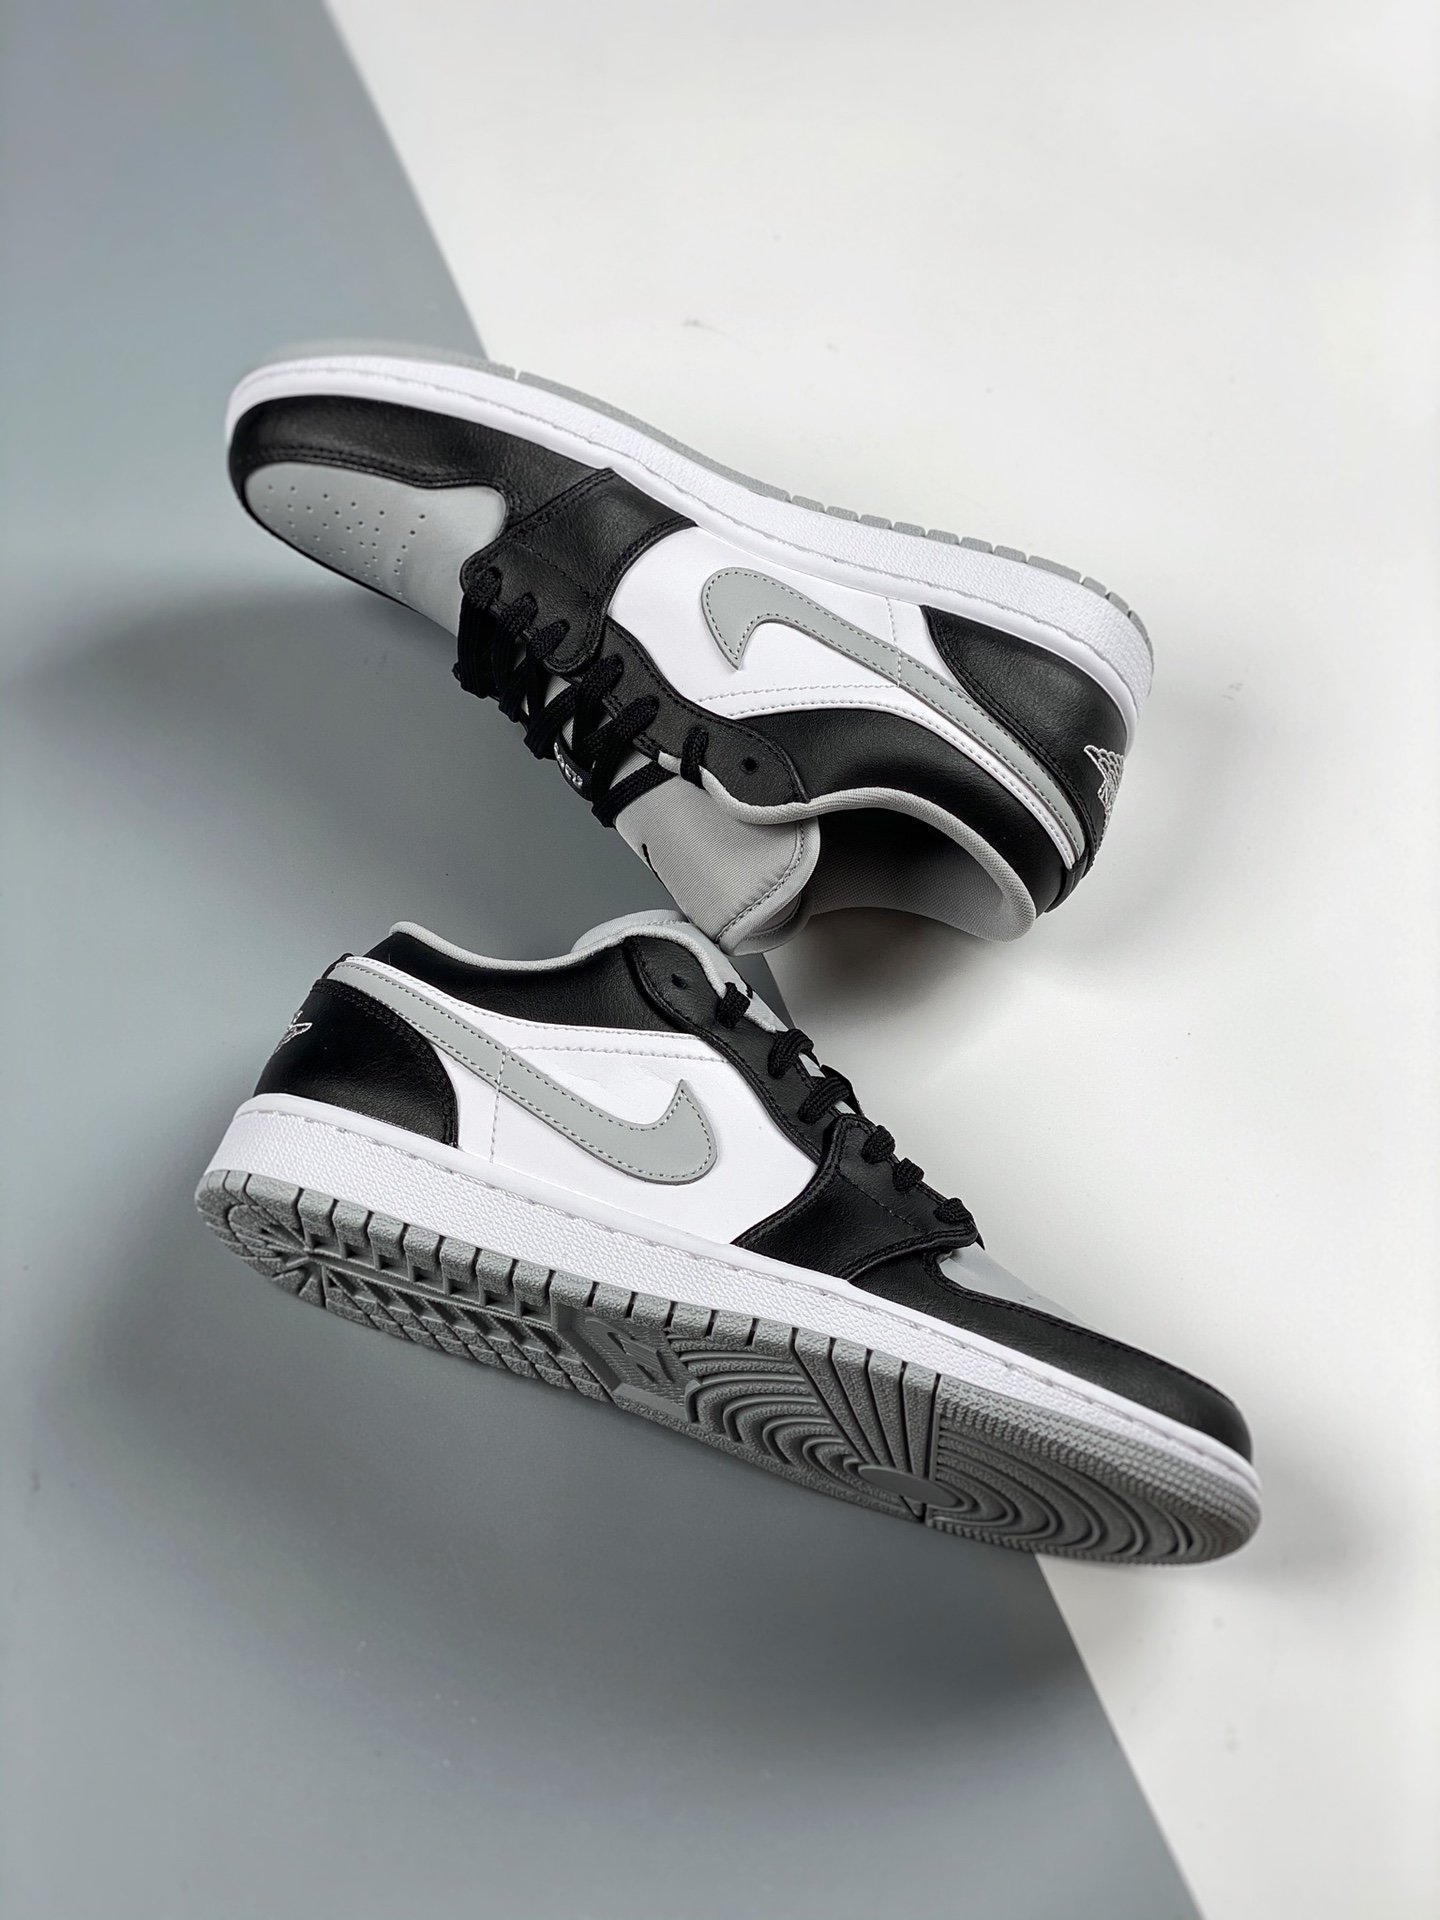 Air Jordan 1 Low “Light Smoke Grey” 553558-039 For Sale – Sneaker Hello